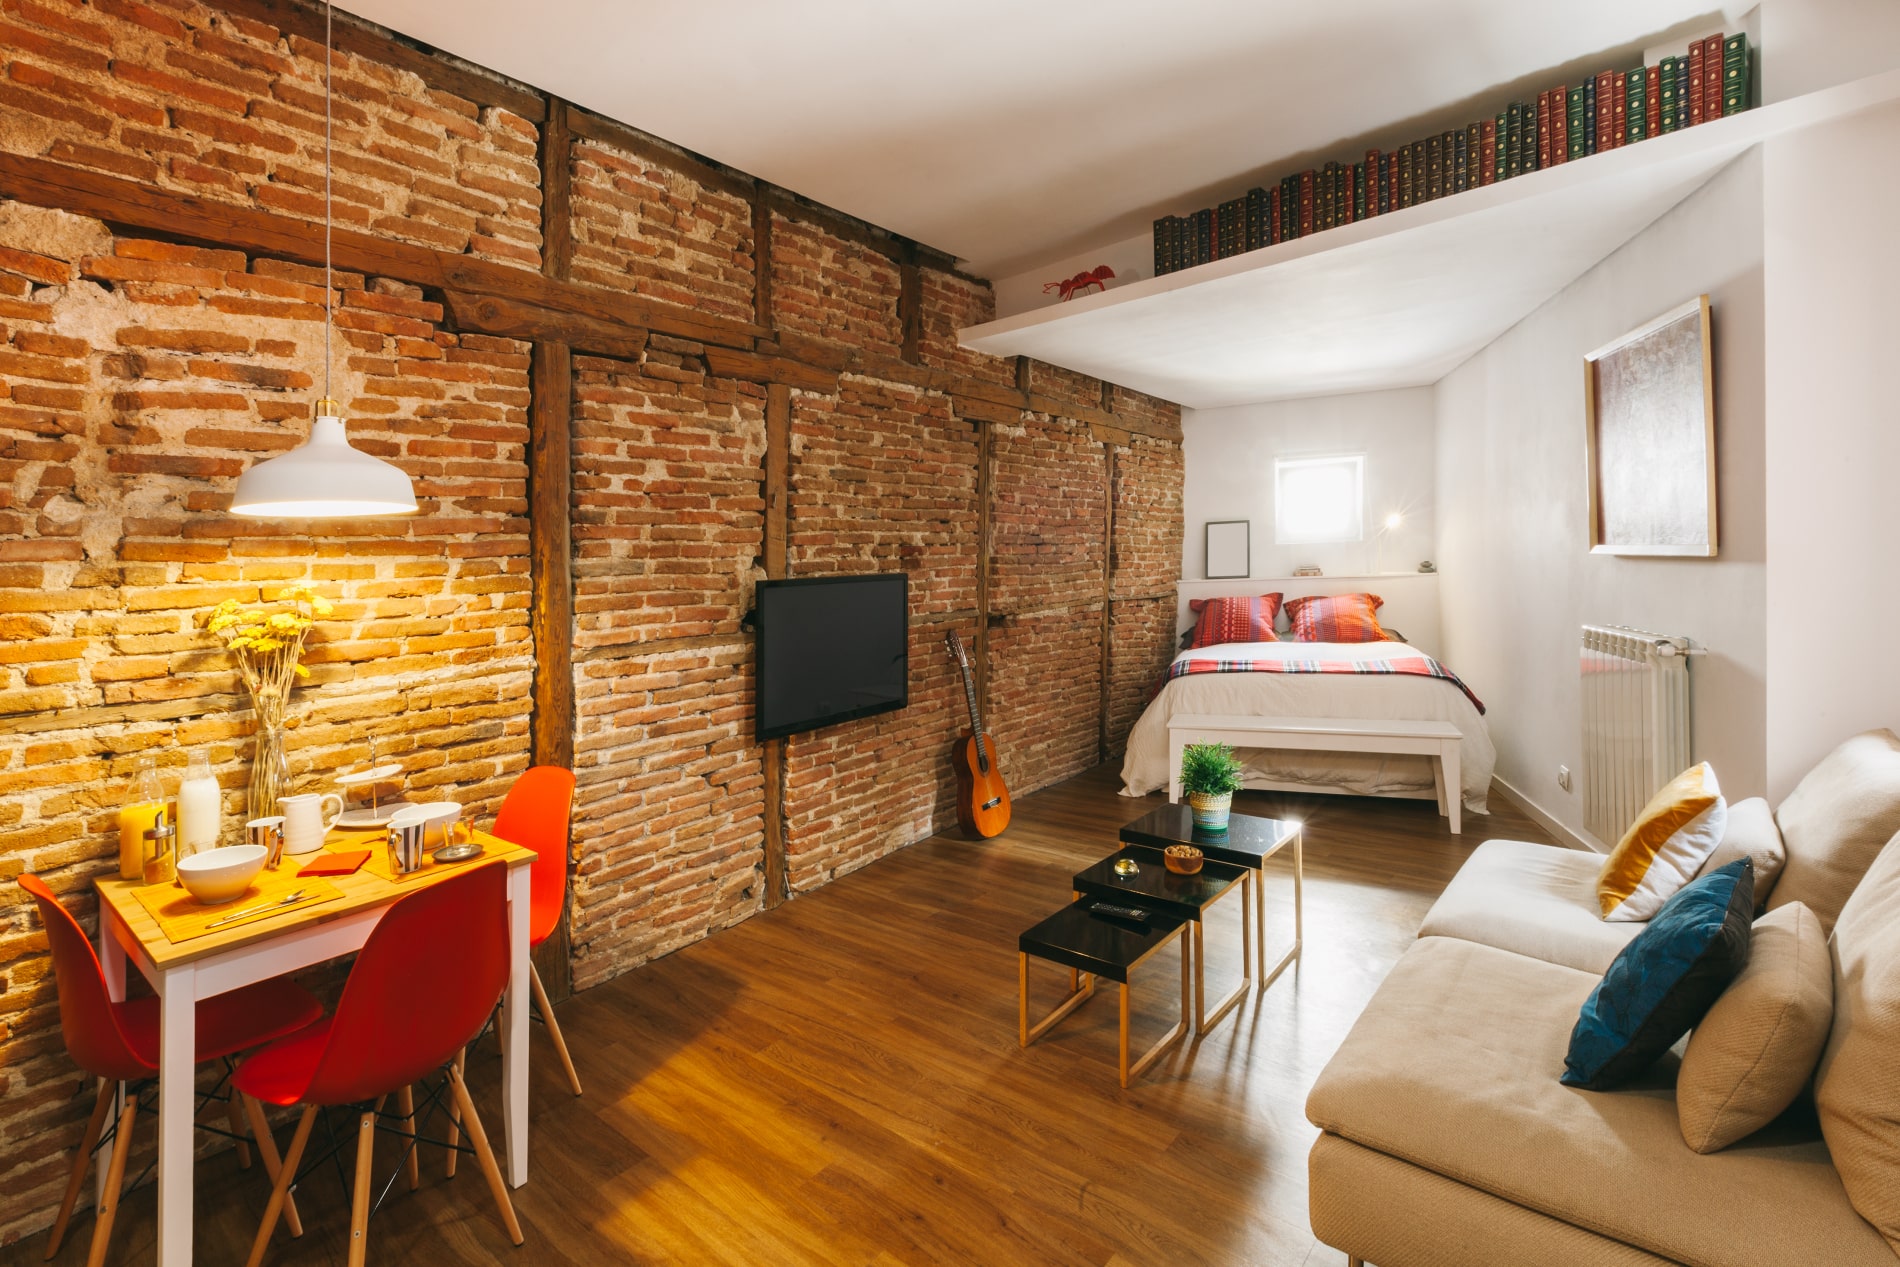 Cozy Apartment with brick walls